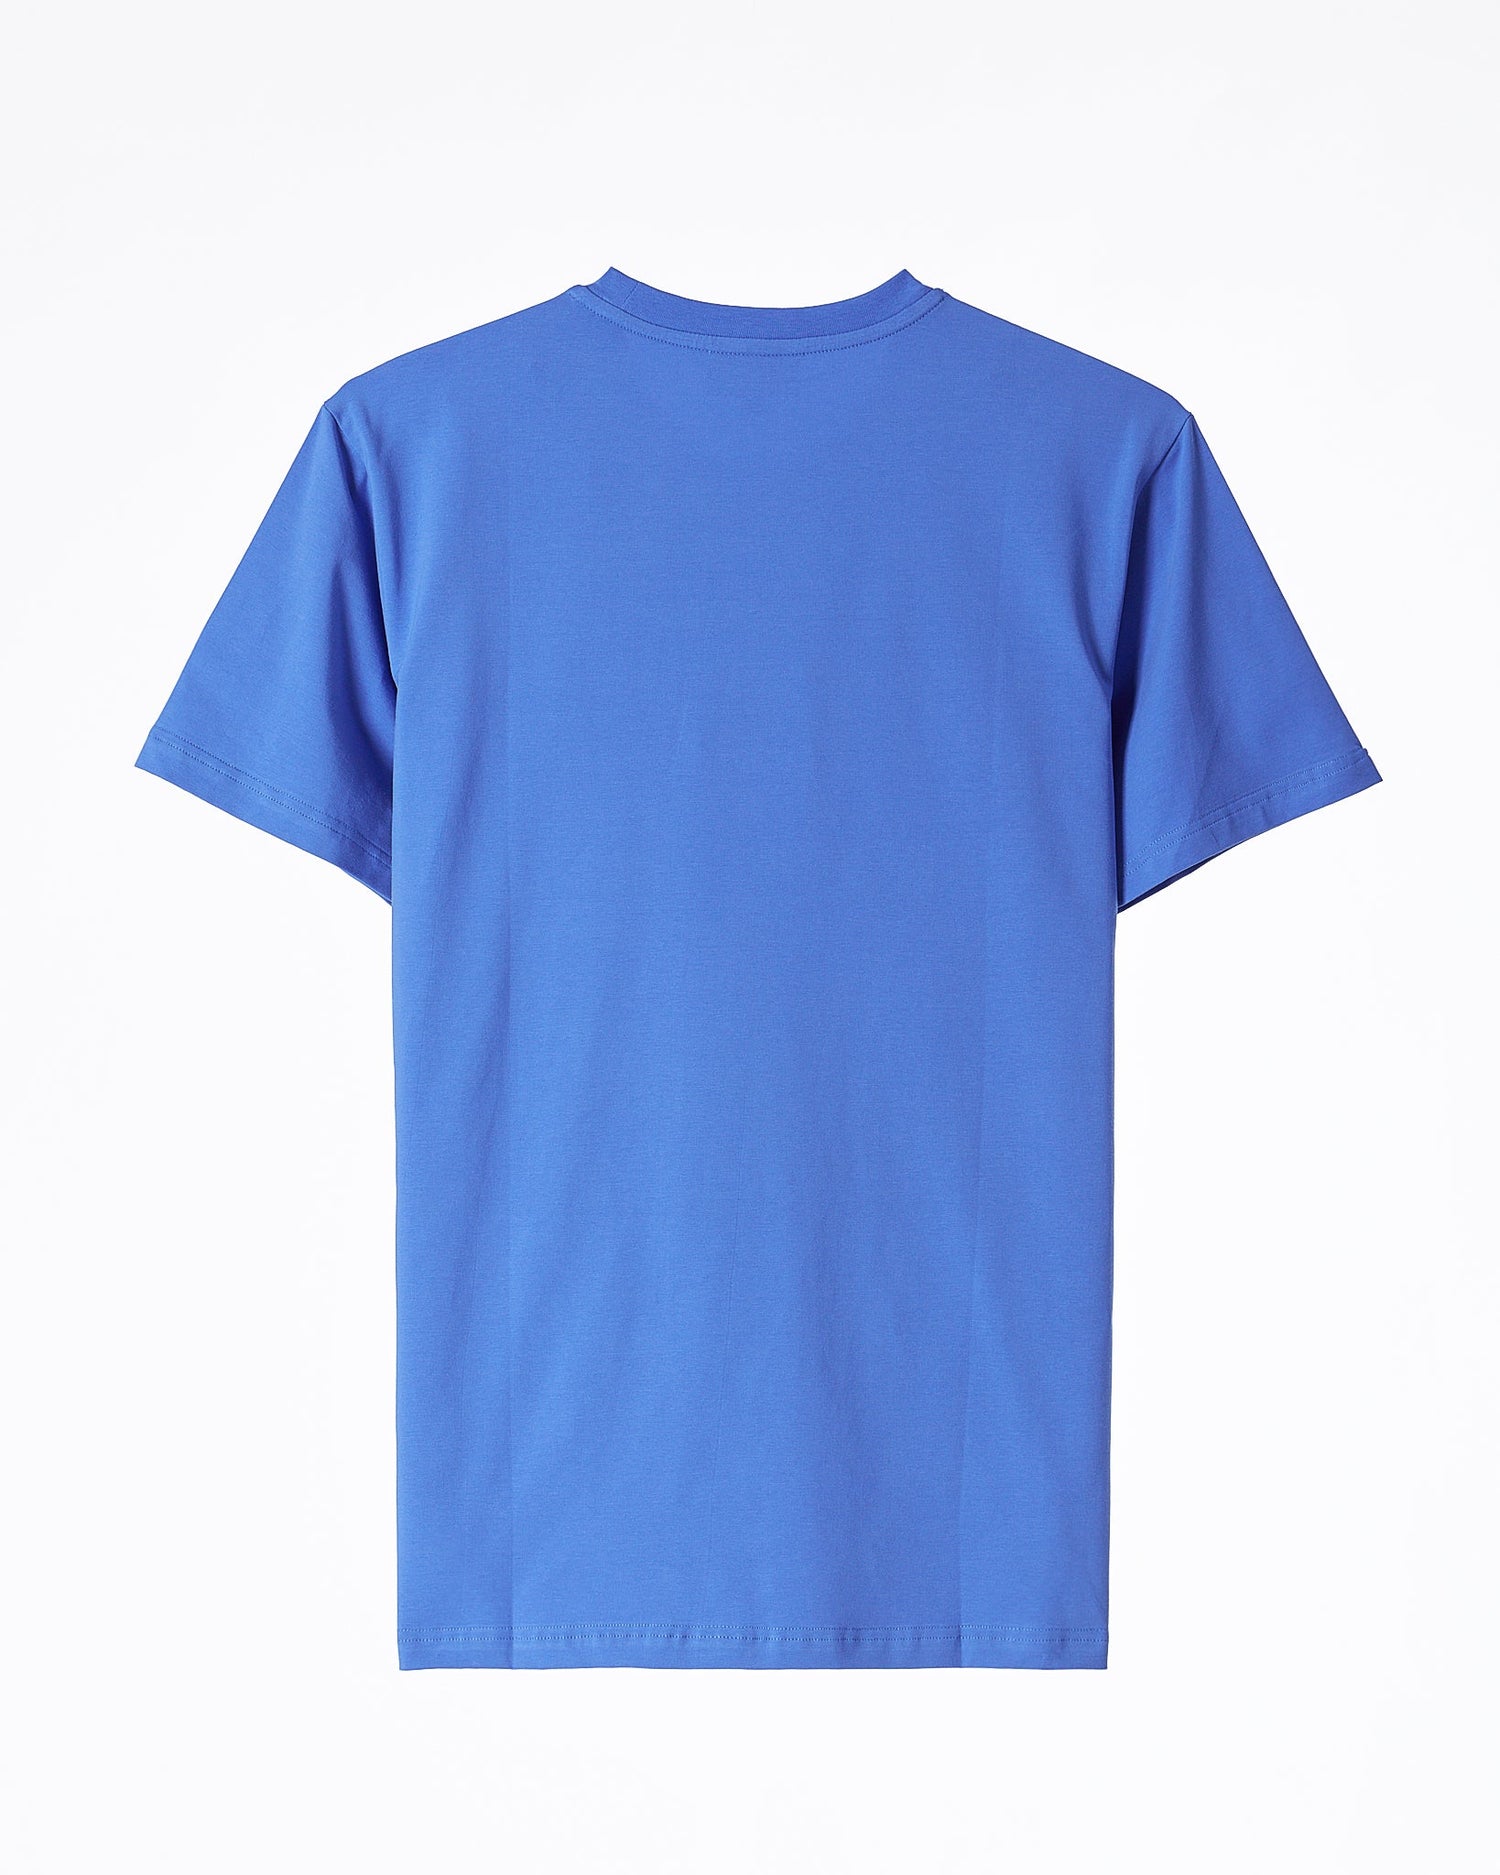 MOI OUTFIT-Alligator Men Blue T-Shirt 14.90